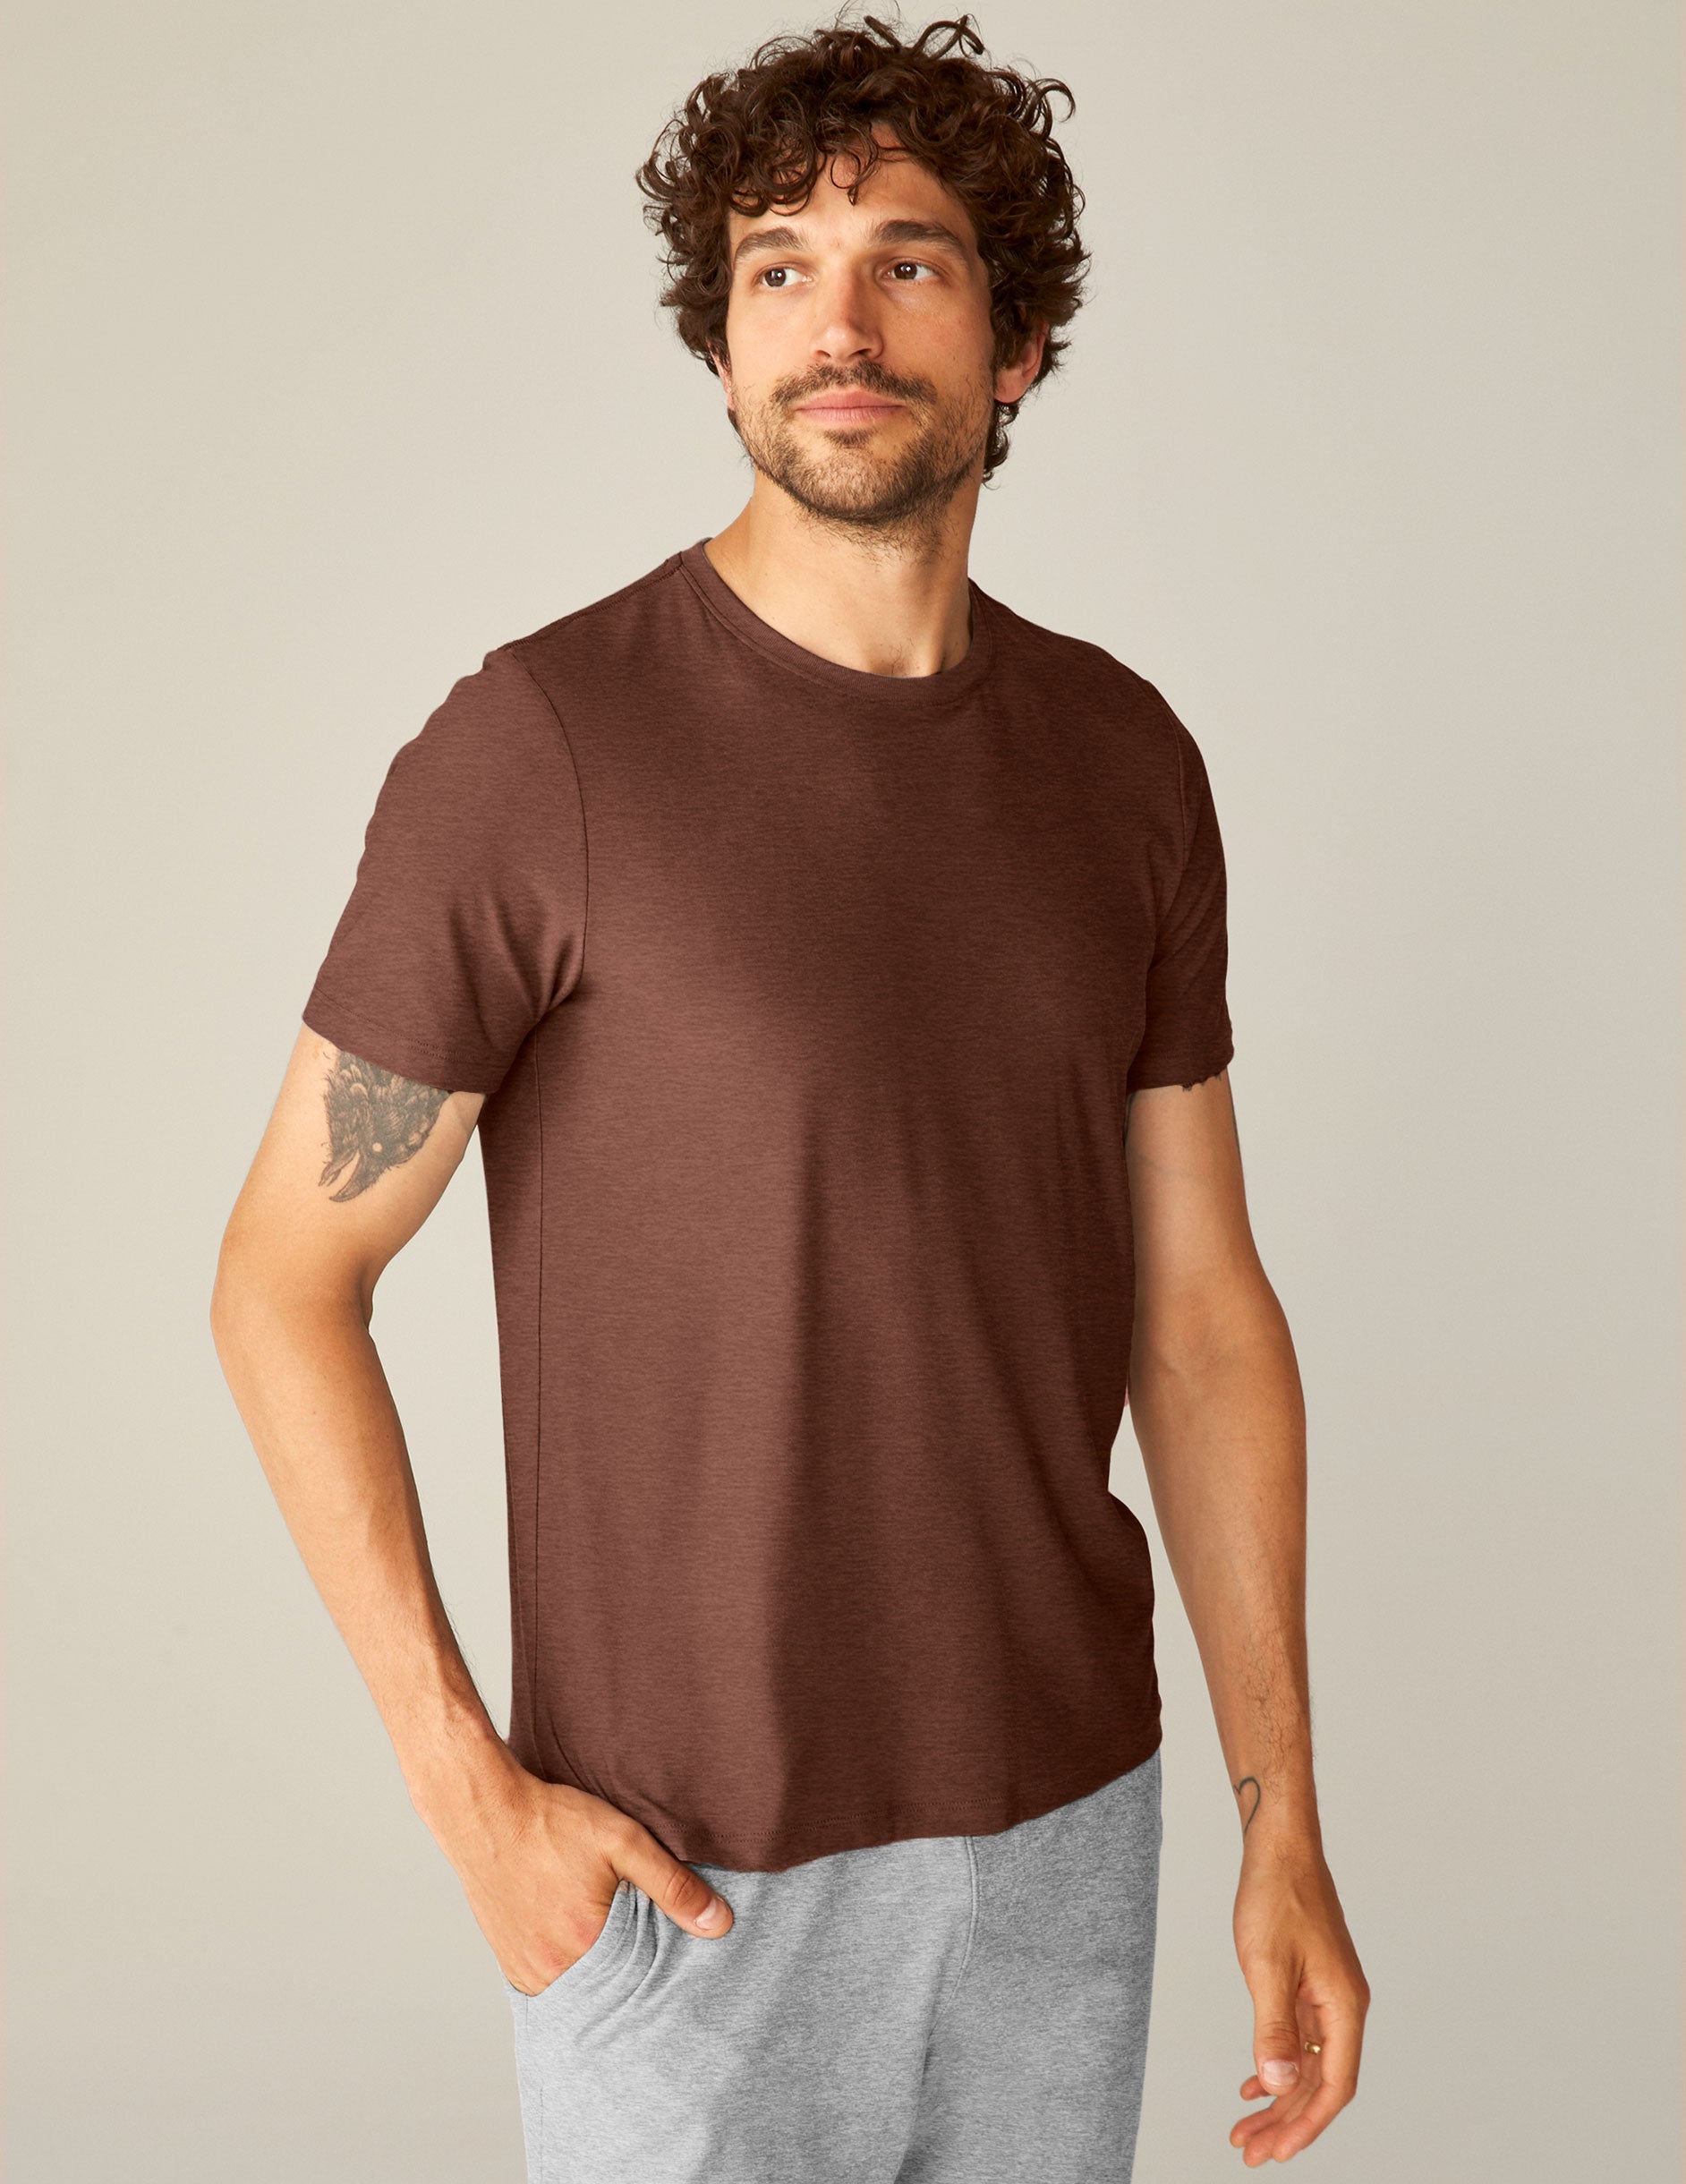 brown men's t-shirt. 